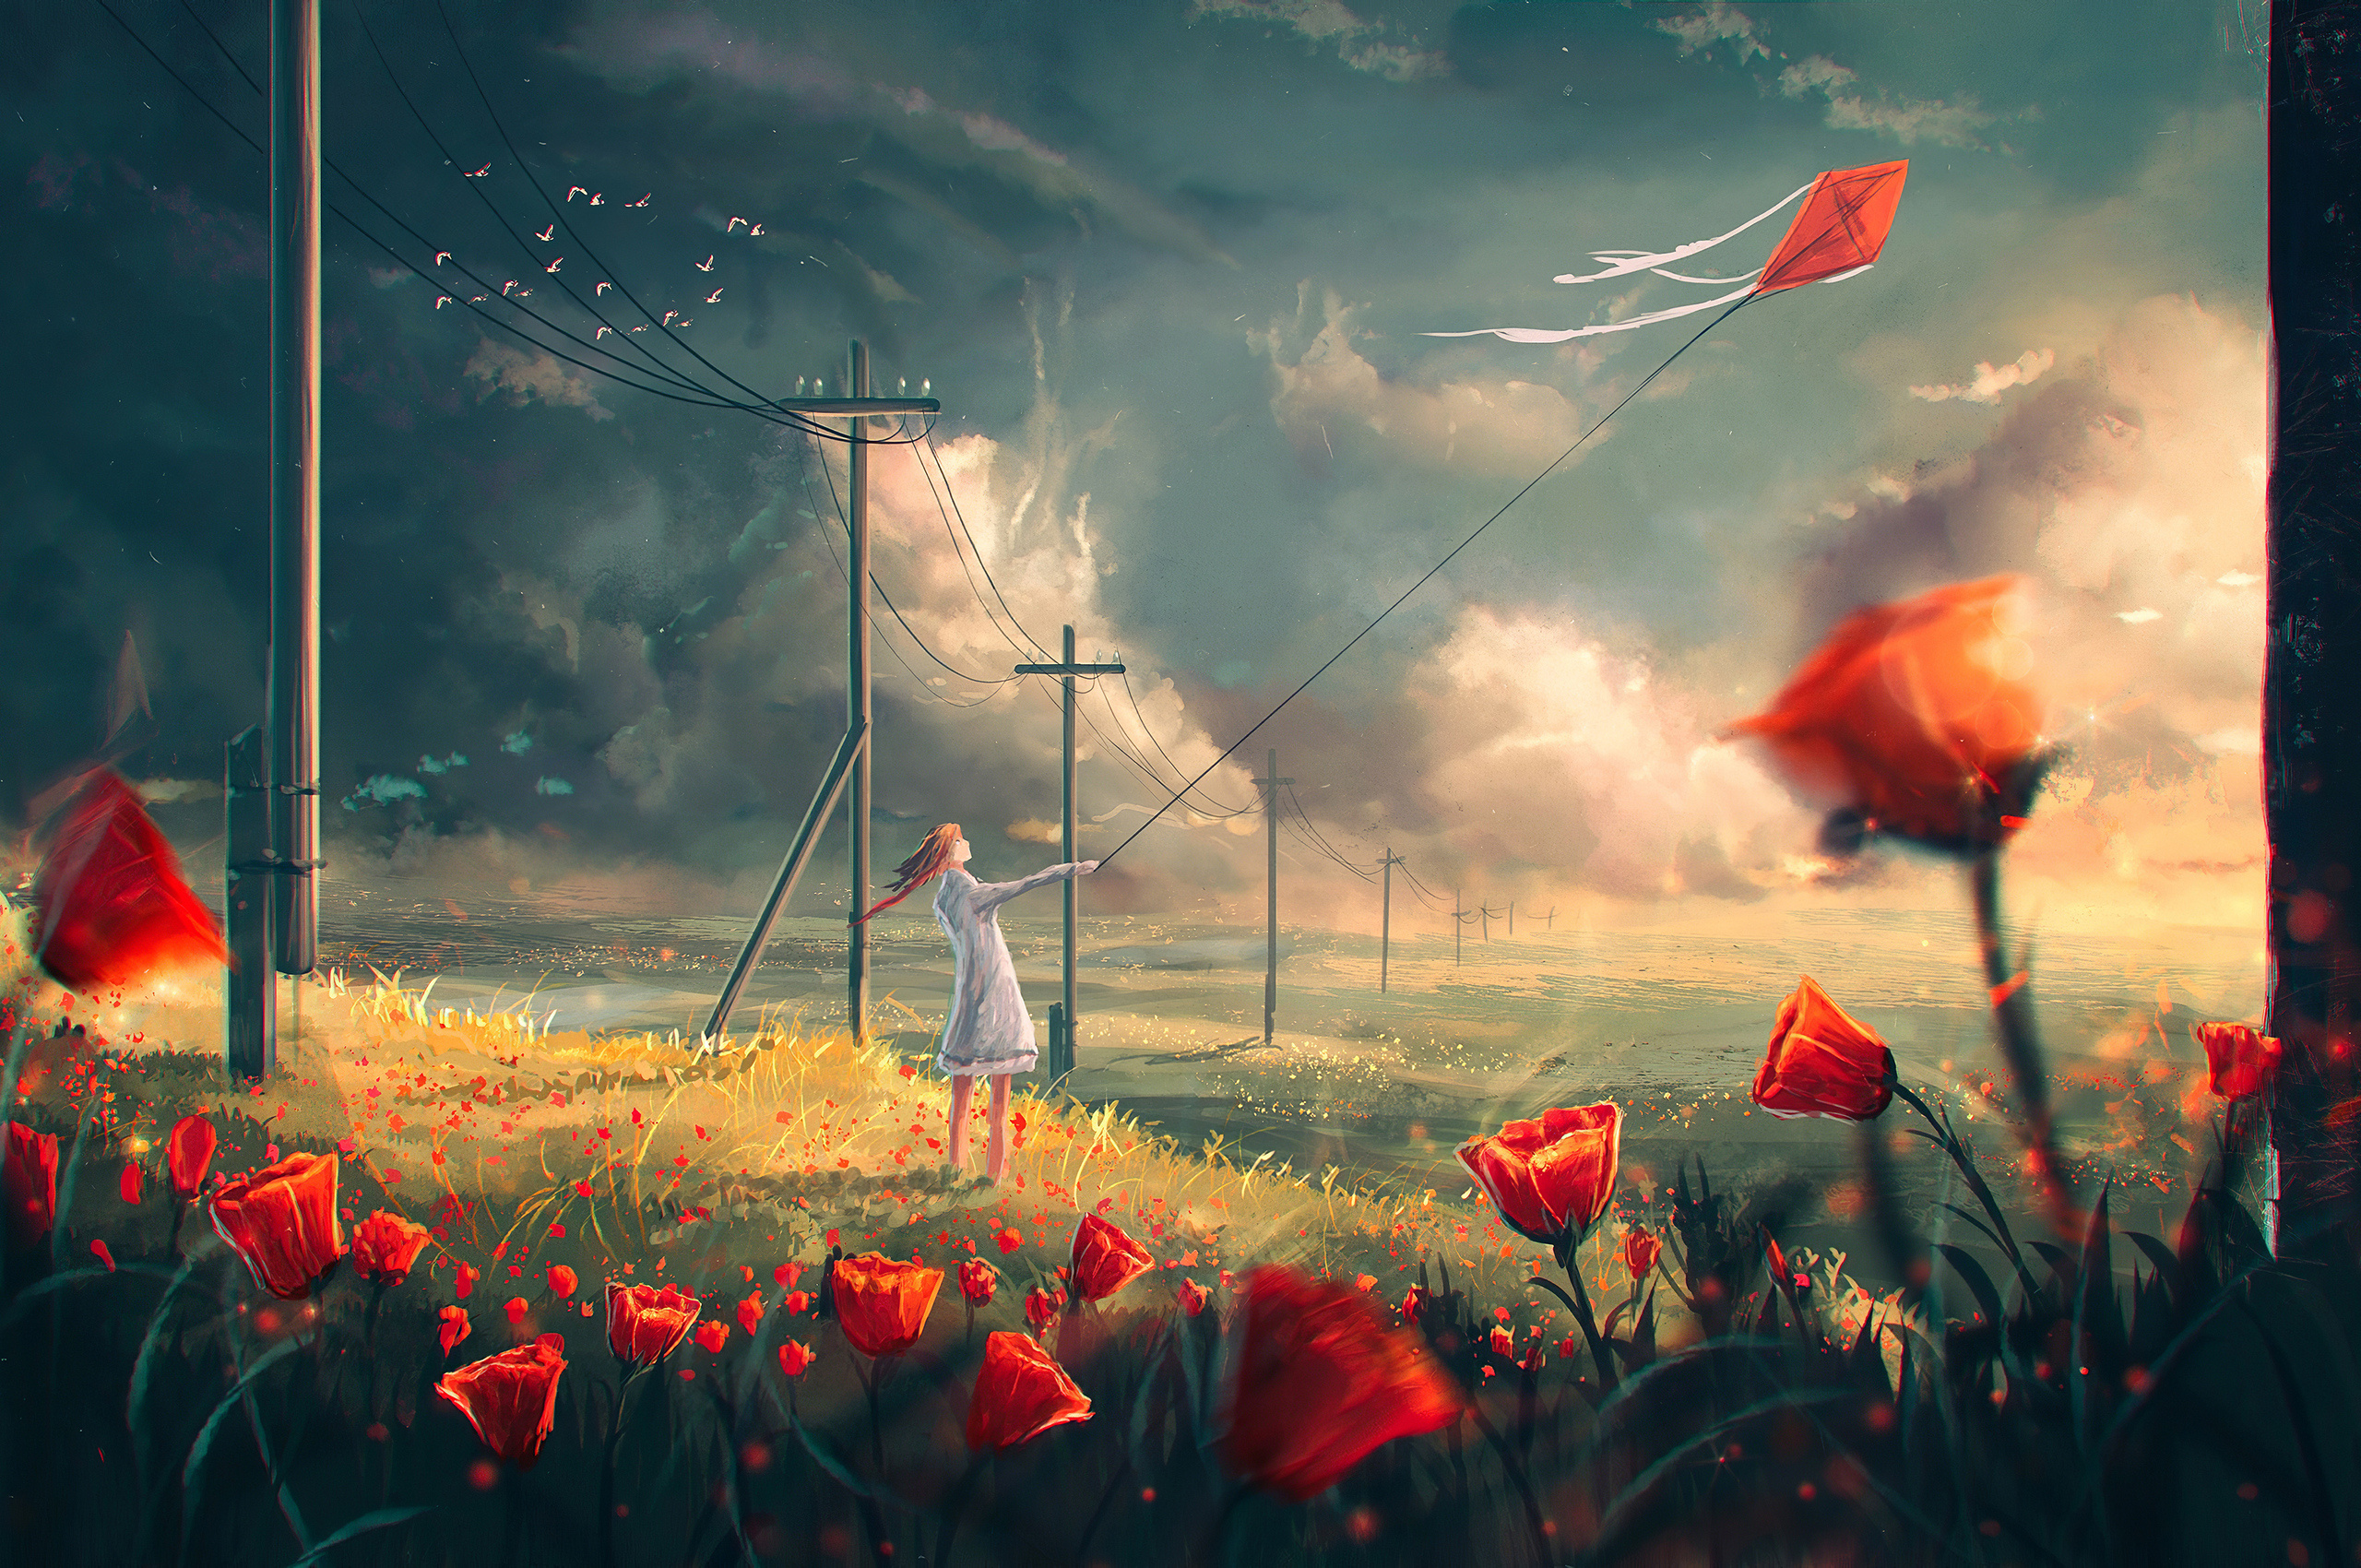 Kite Flying: Art, Pencil drawing, The kite rising, Flowers, Poppies, Soaring through the air. 2560x1700 HD Wallpaper.